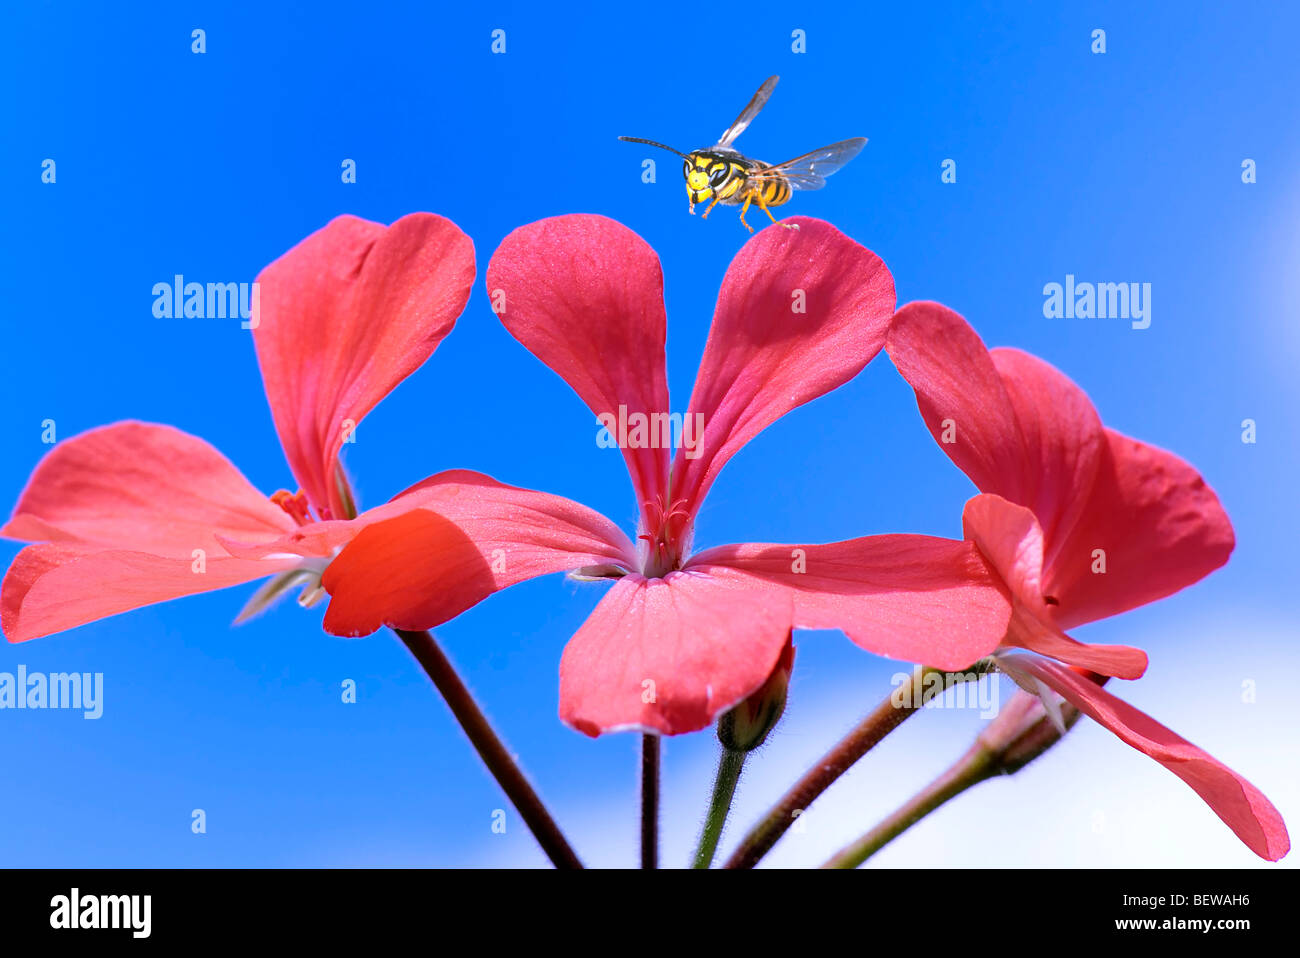 Dolichovespula saxonica flying to geranium, close-up Stock Photo